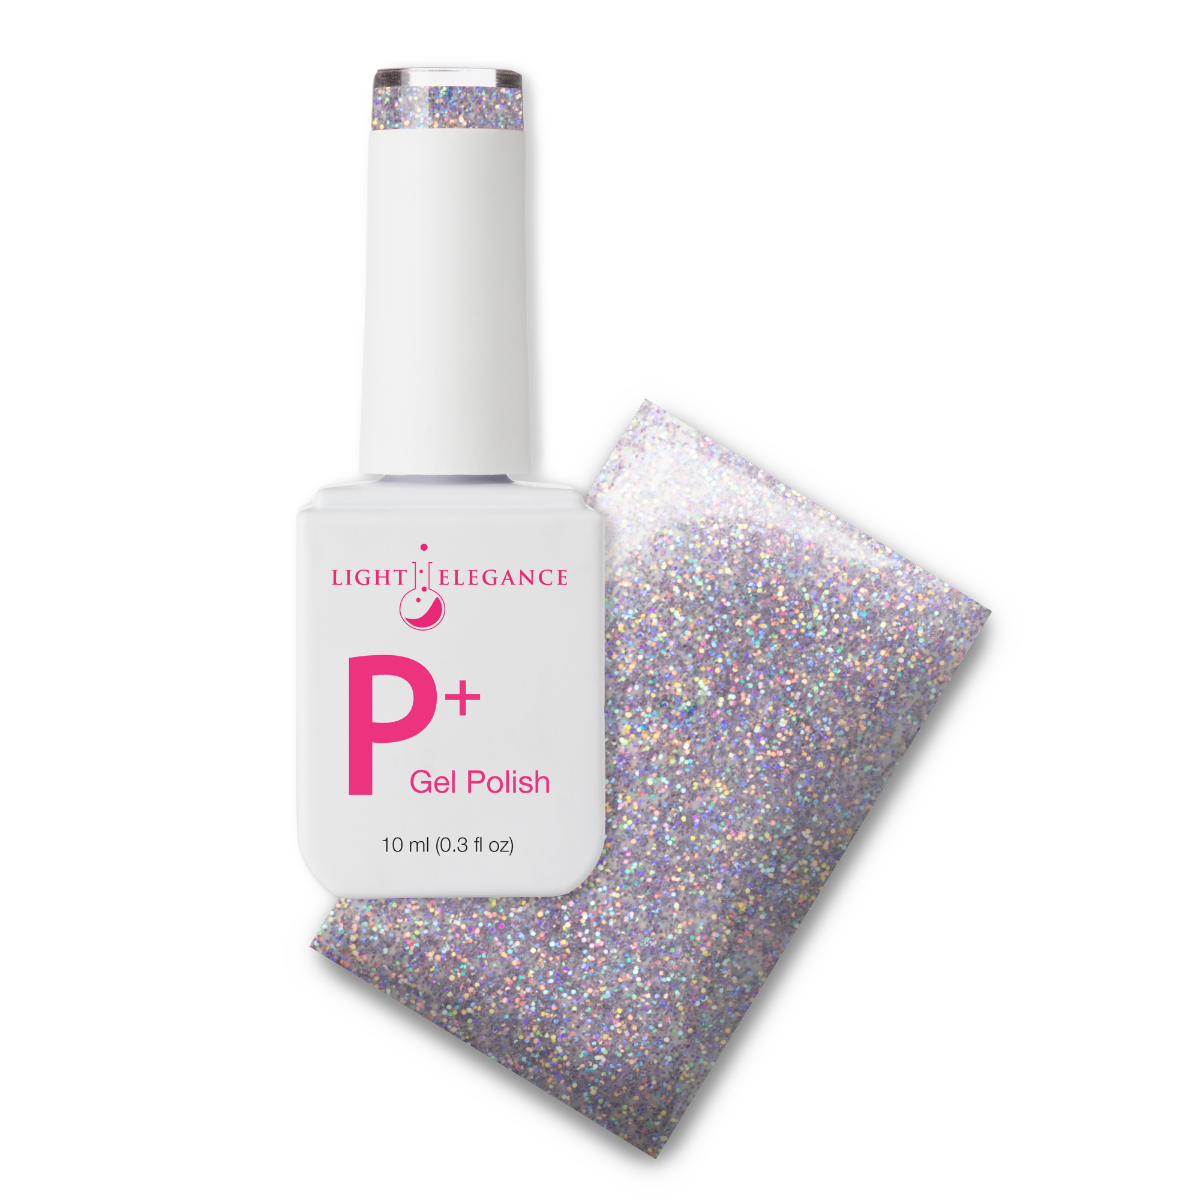 Light Elegance P+ Soak Off Glitter Gel - Get Buzzed :: New Packaging